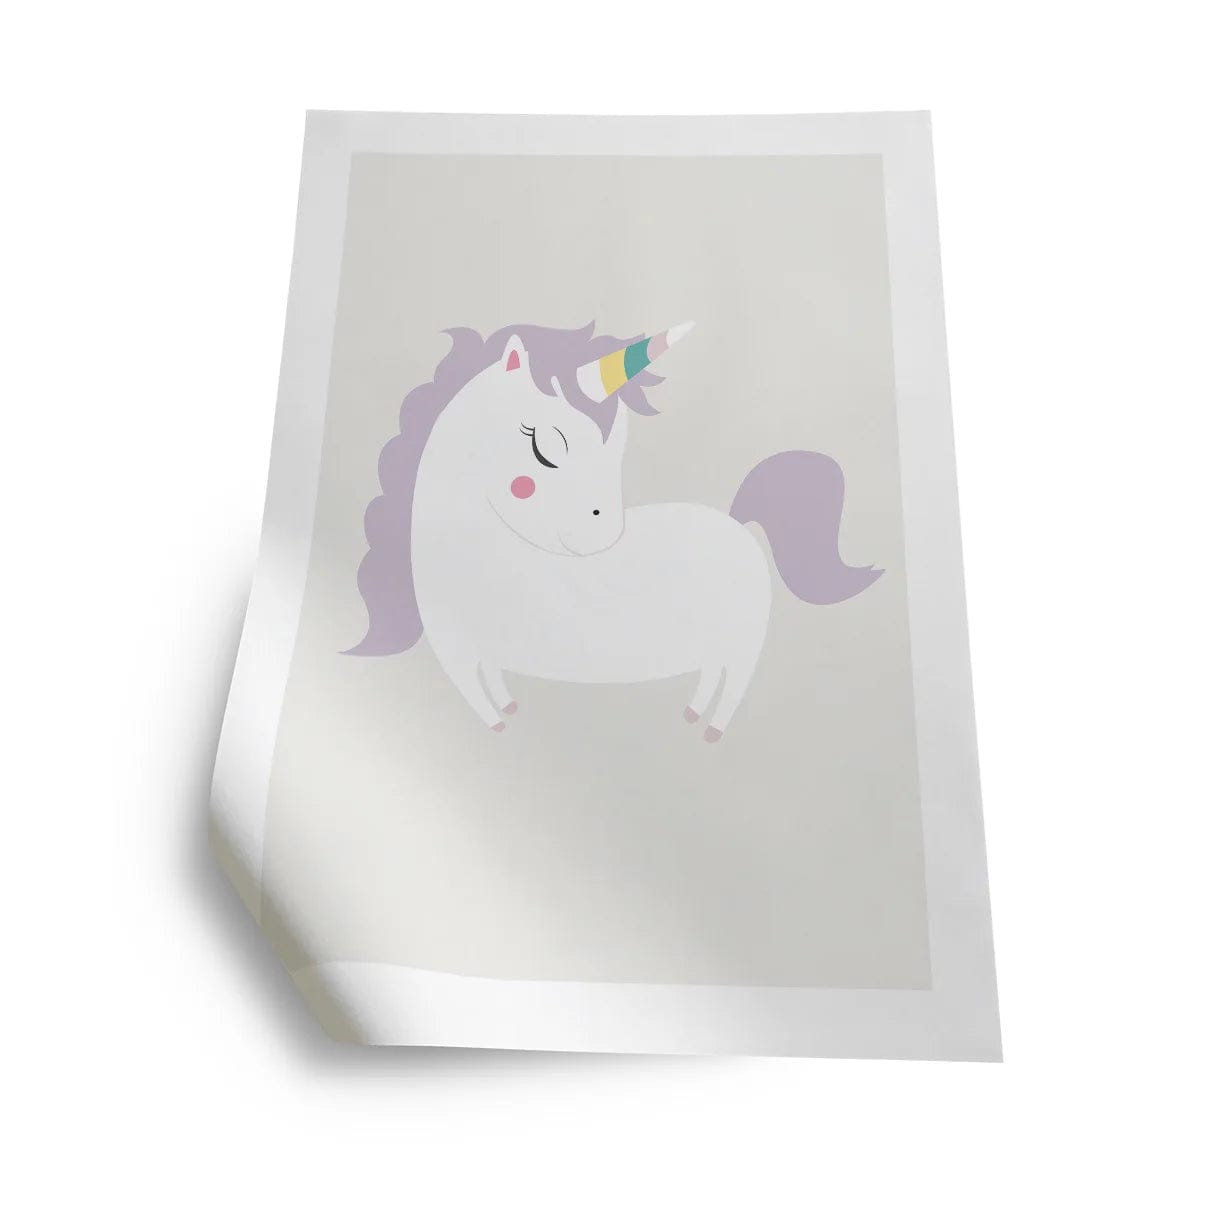 INCADO Poster Πόστερ Με Ξύλινη Λευκή Κορνίζα Ακ Γυαλί Girly Unicorn II 30x40 cm INCADO